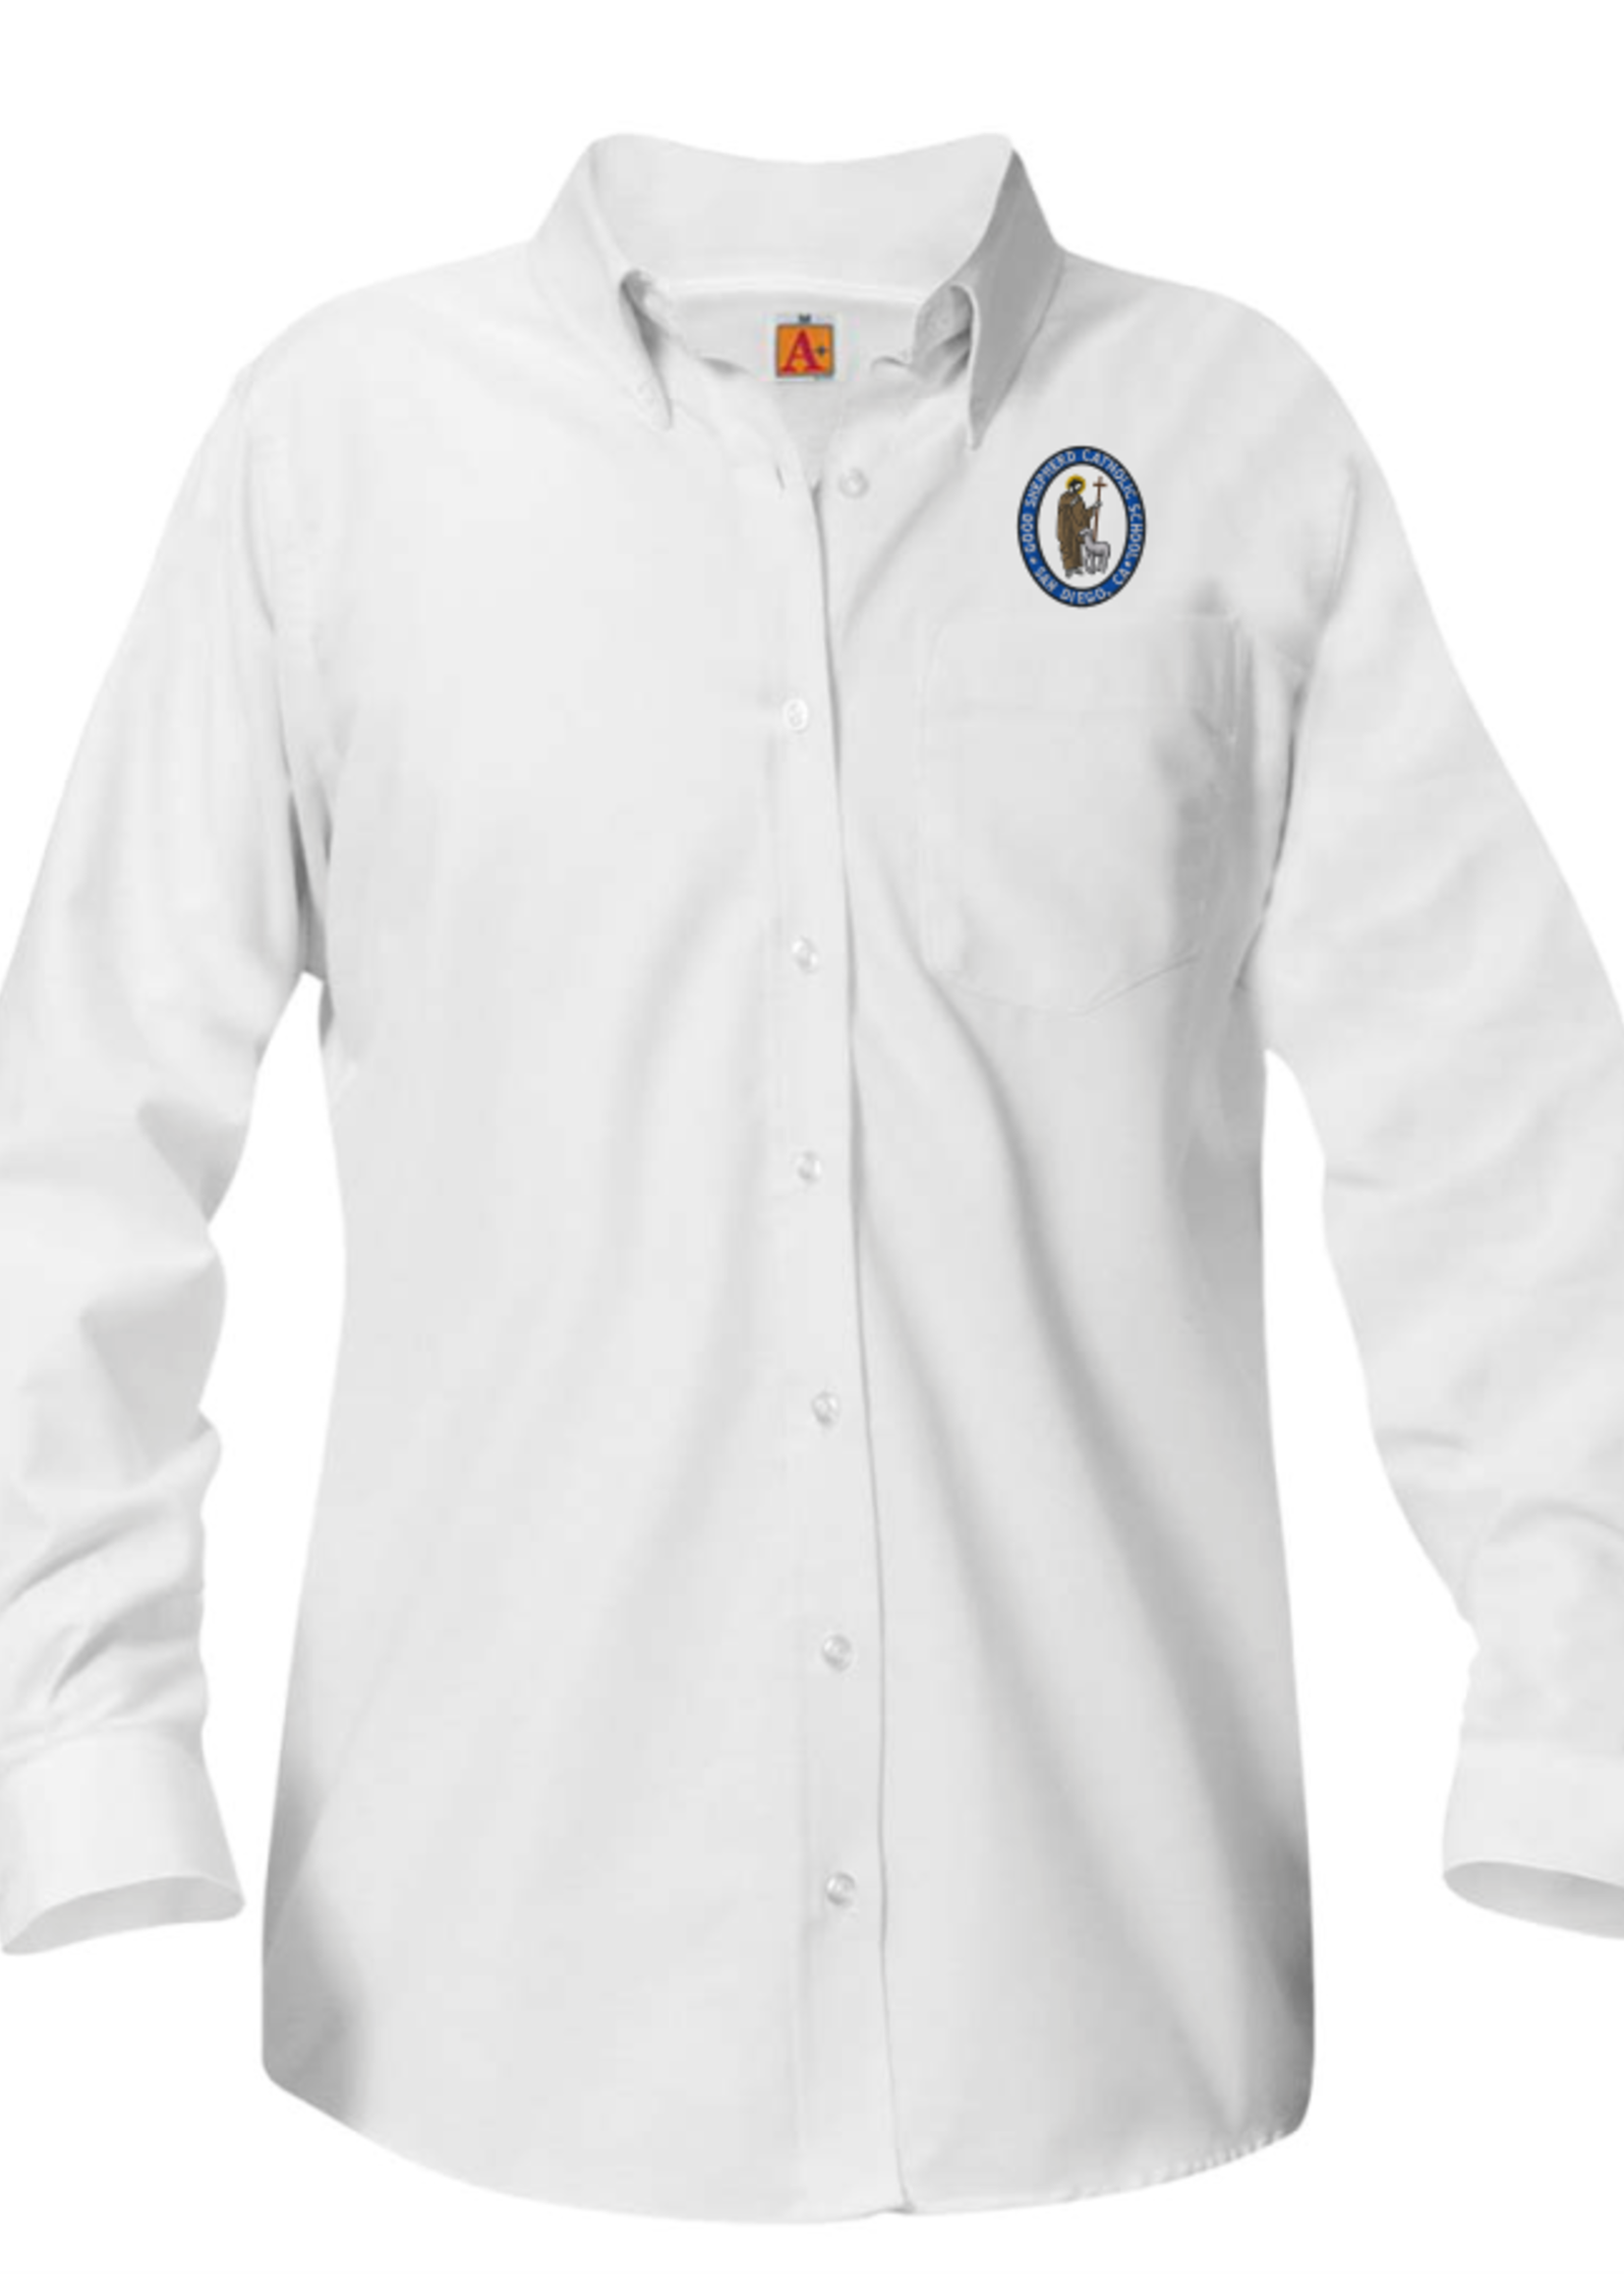 GSCS White Long Sleeve Oxford Shirt